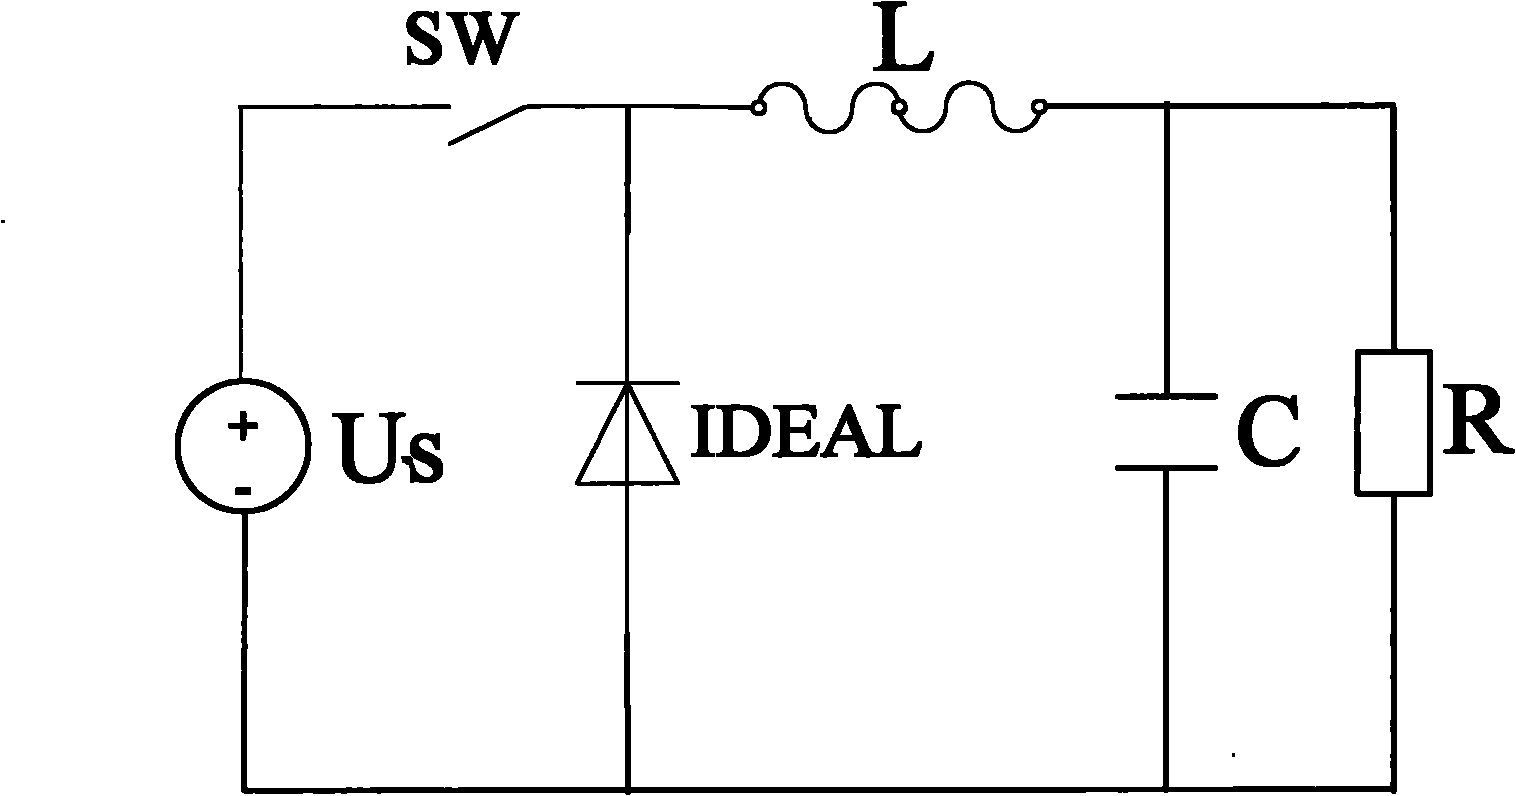 Hybrid switching system theory-based Buck circuit modeling method